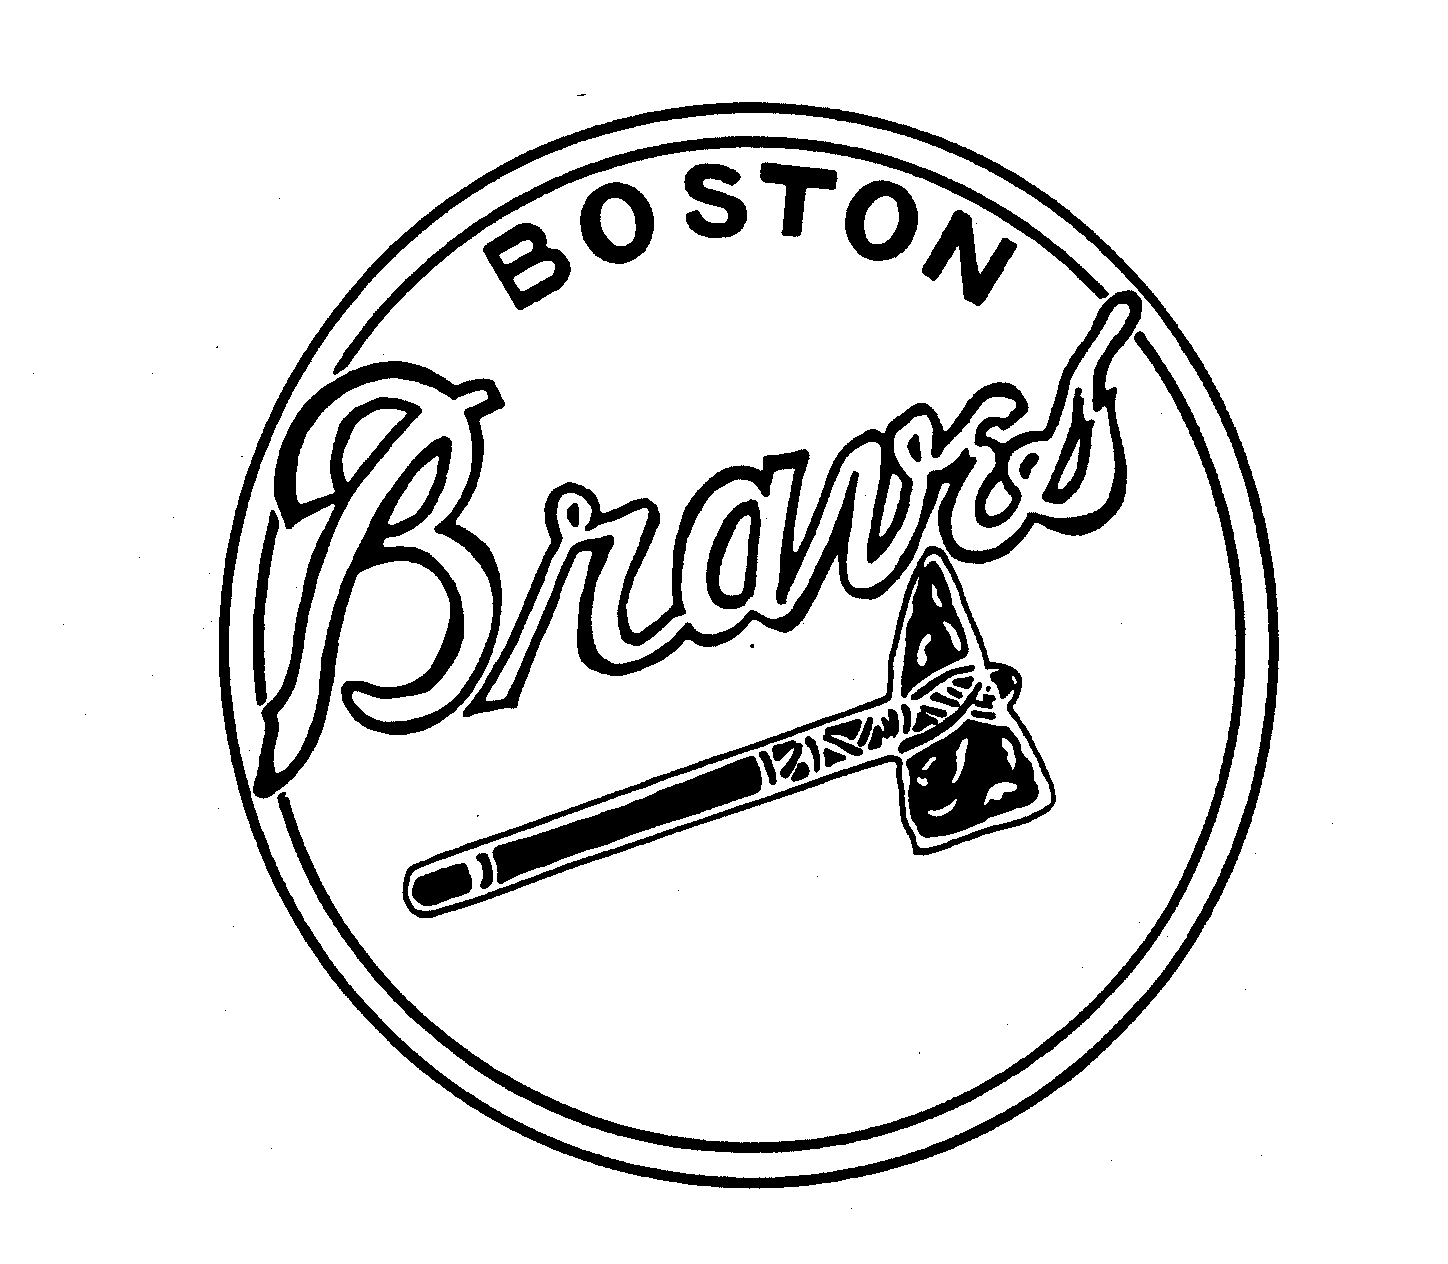  BOSTON BRAVES